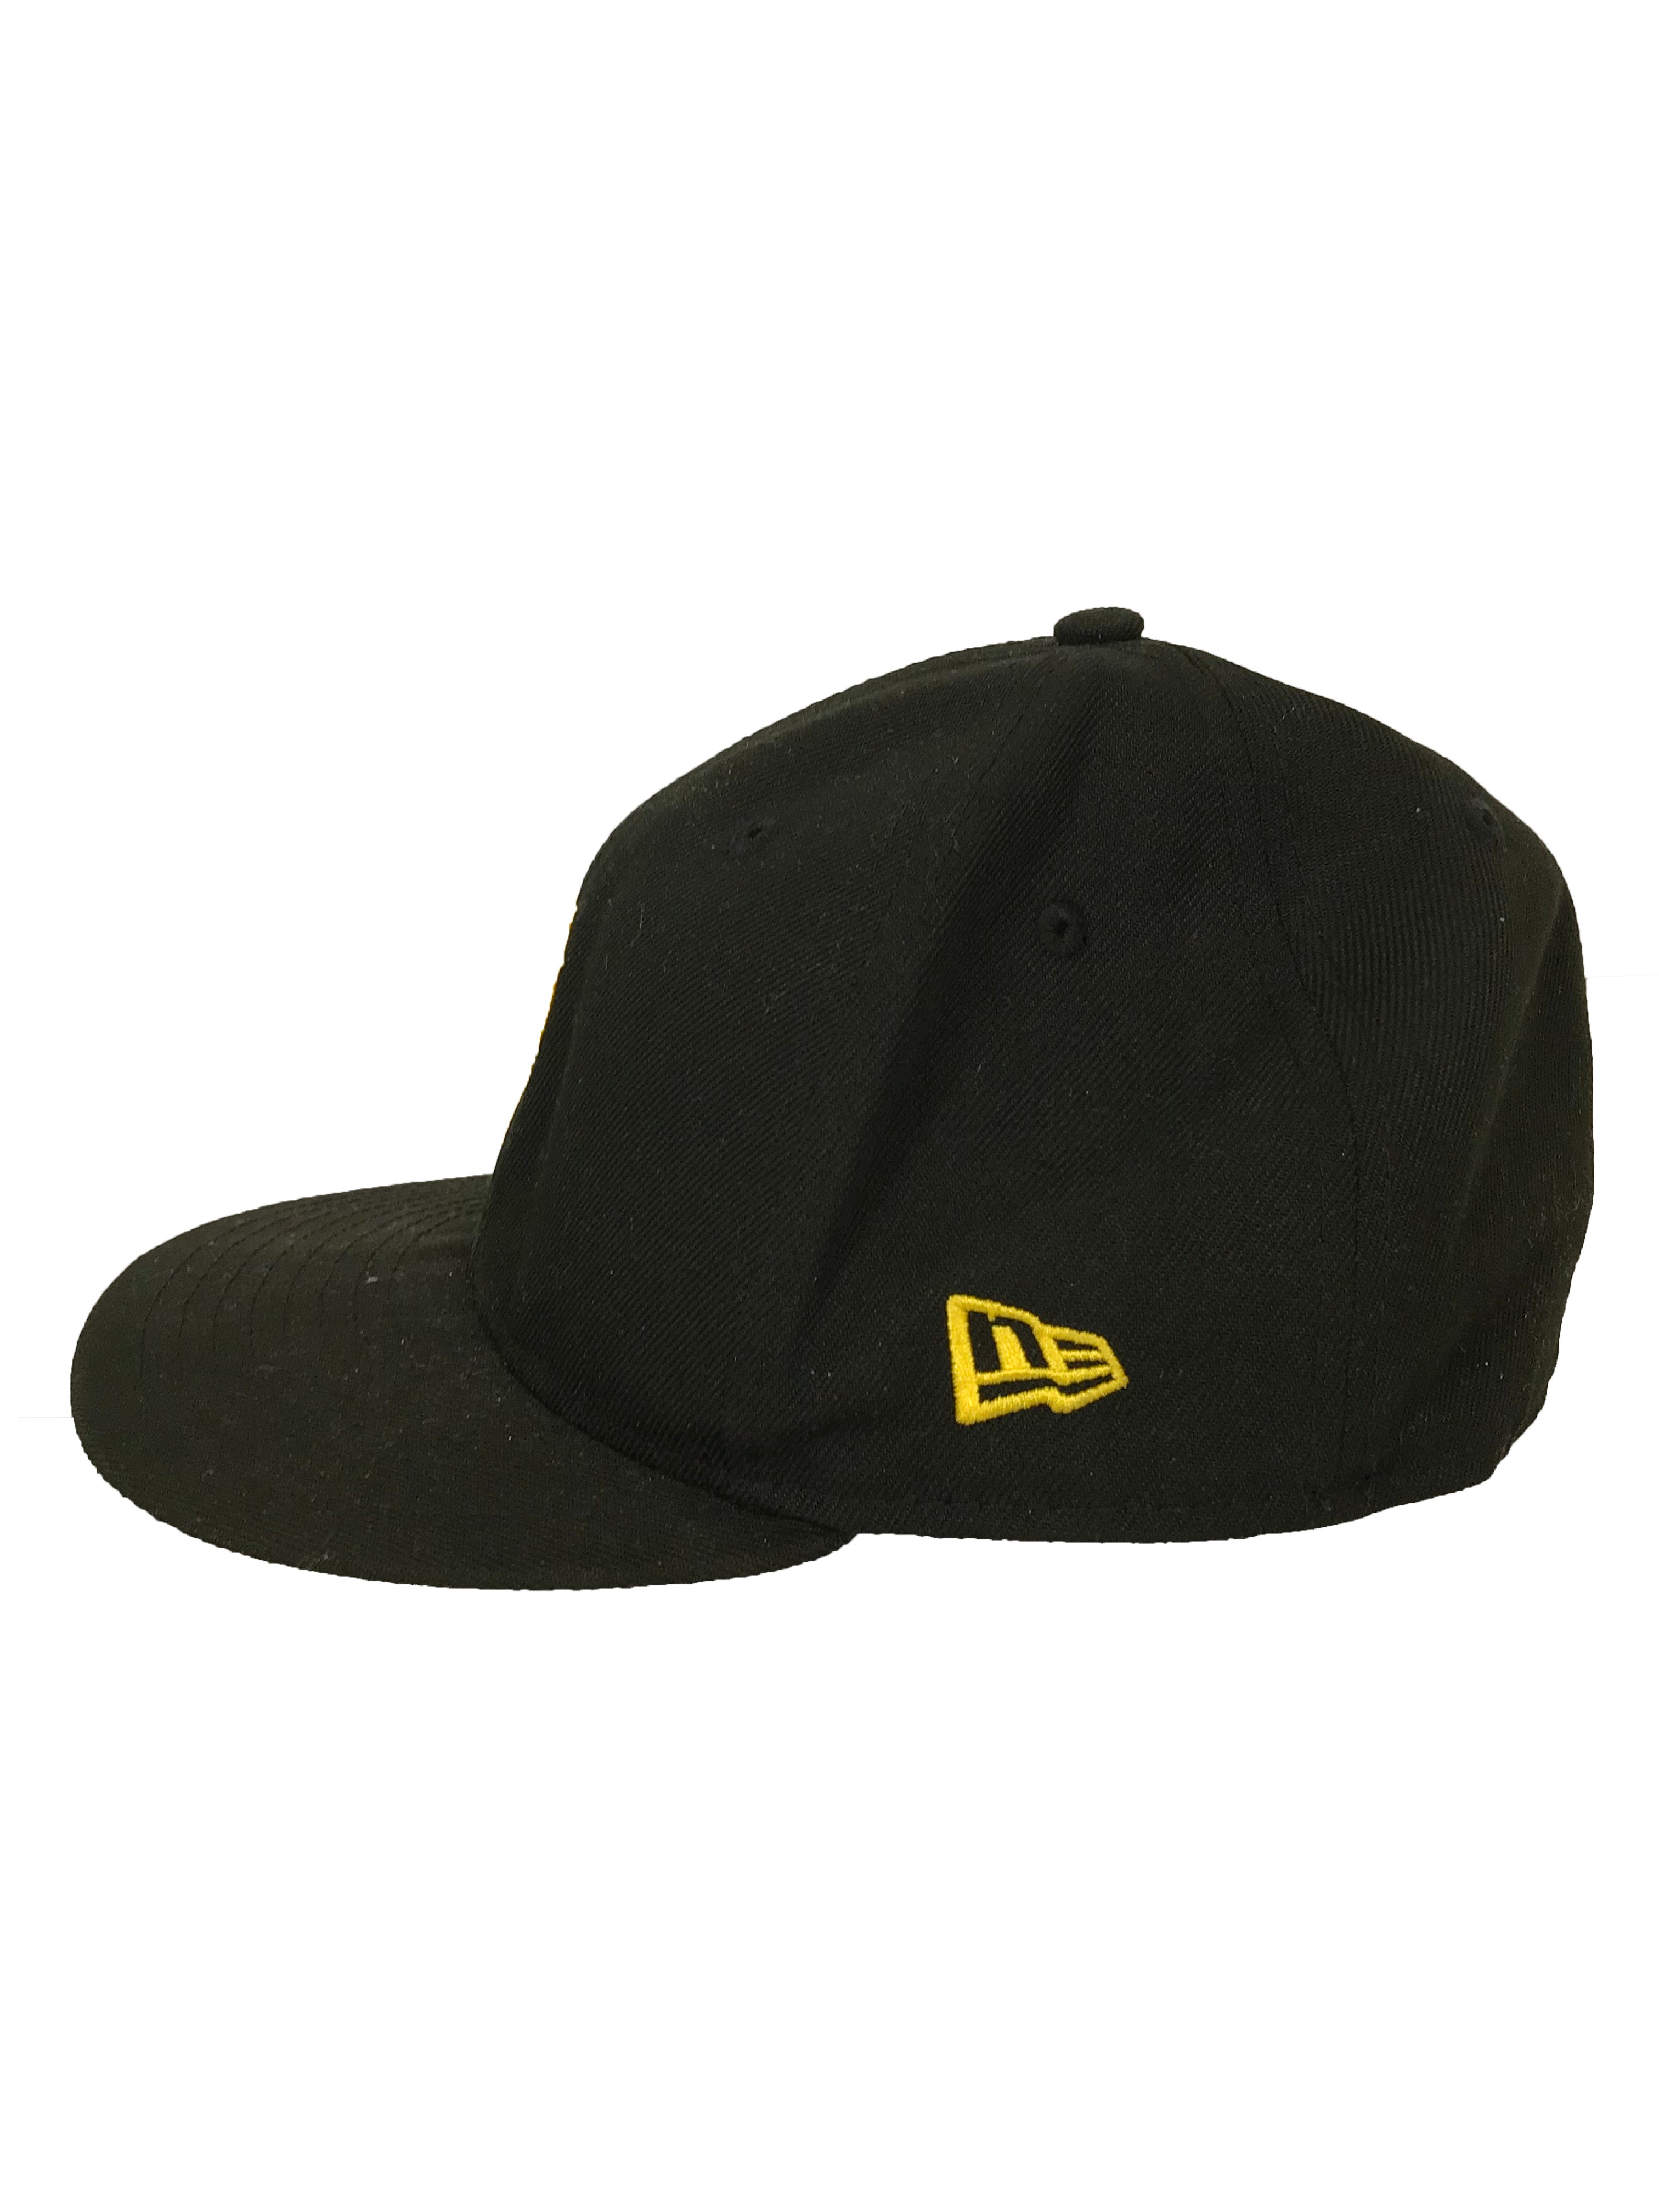 New Era Pittsburgh Pirates Black Fitted Baseball Hat Unisex Size 7